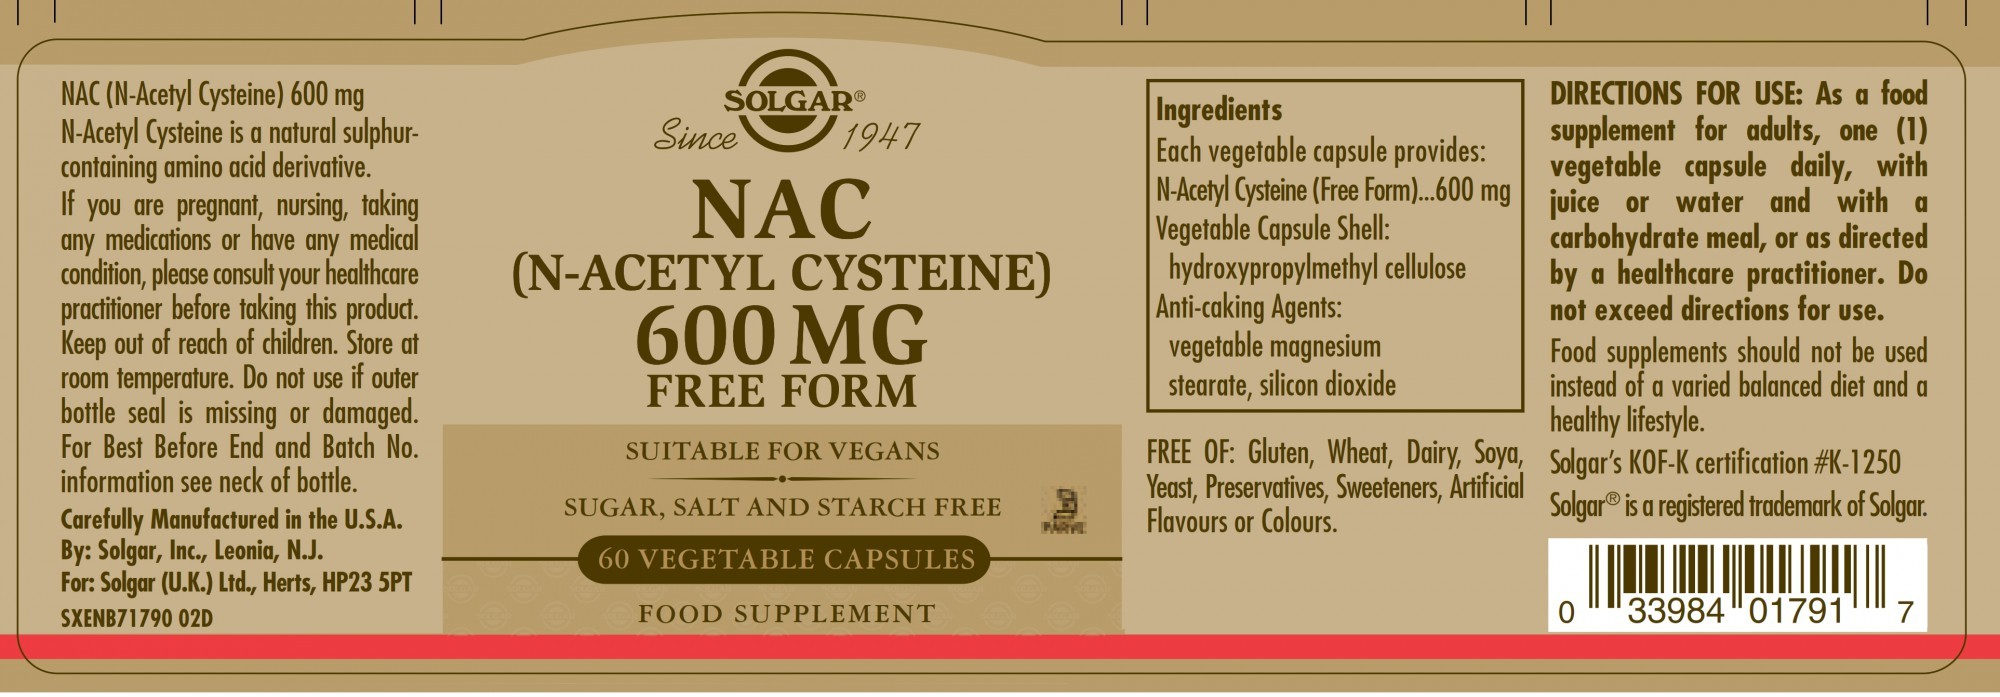 Solgar Nac (N-Acetyl Cysteine) 600 MG